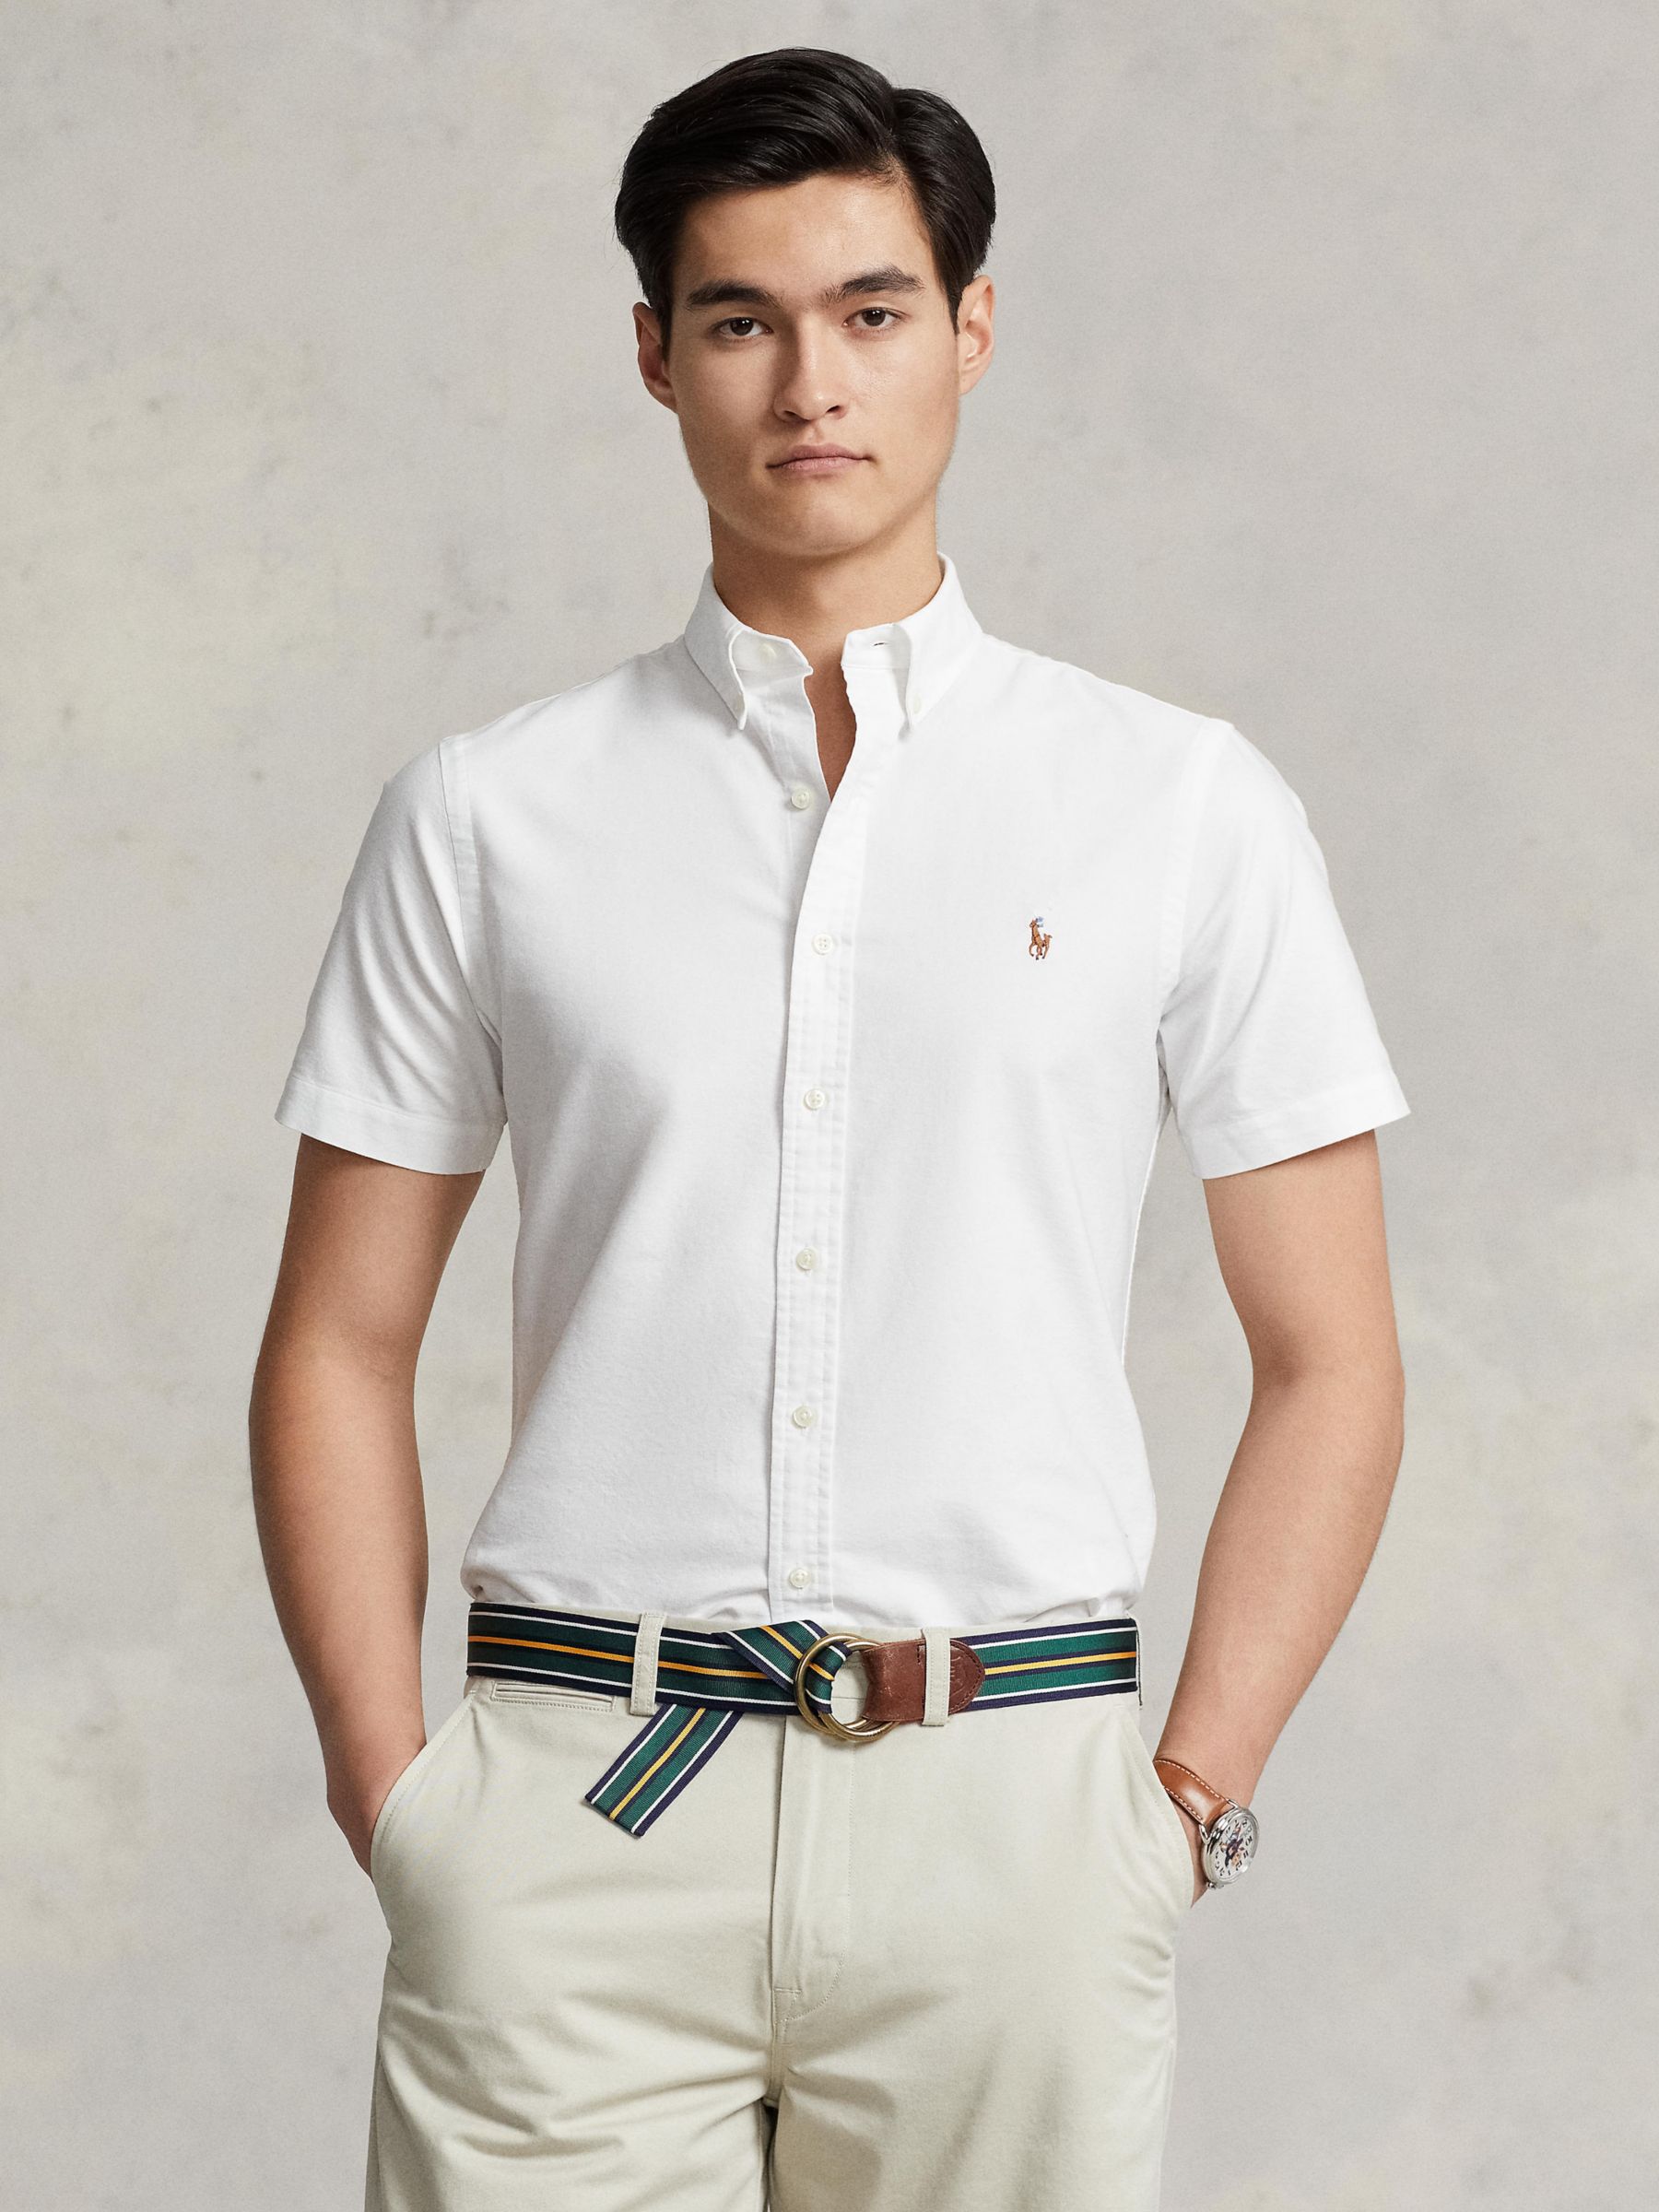 Ralph Lauren Slim Fit Oxford Short Sleeve Shirt, White, M